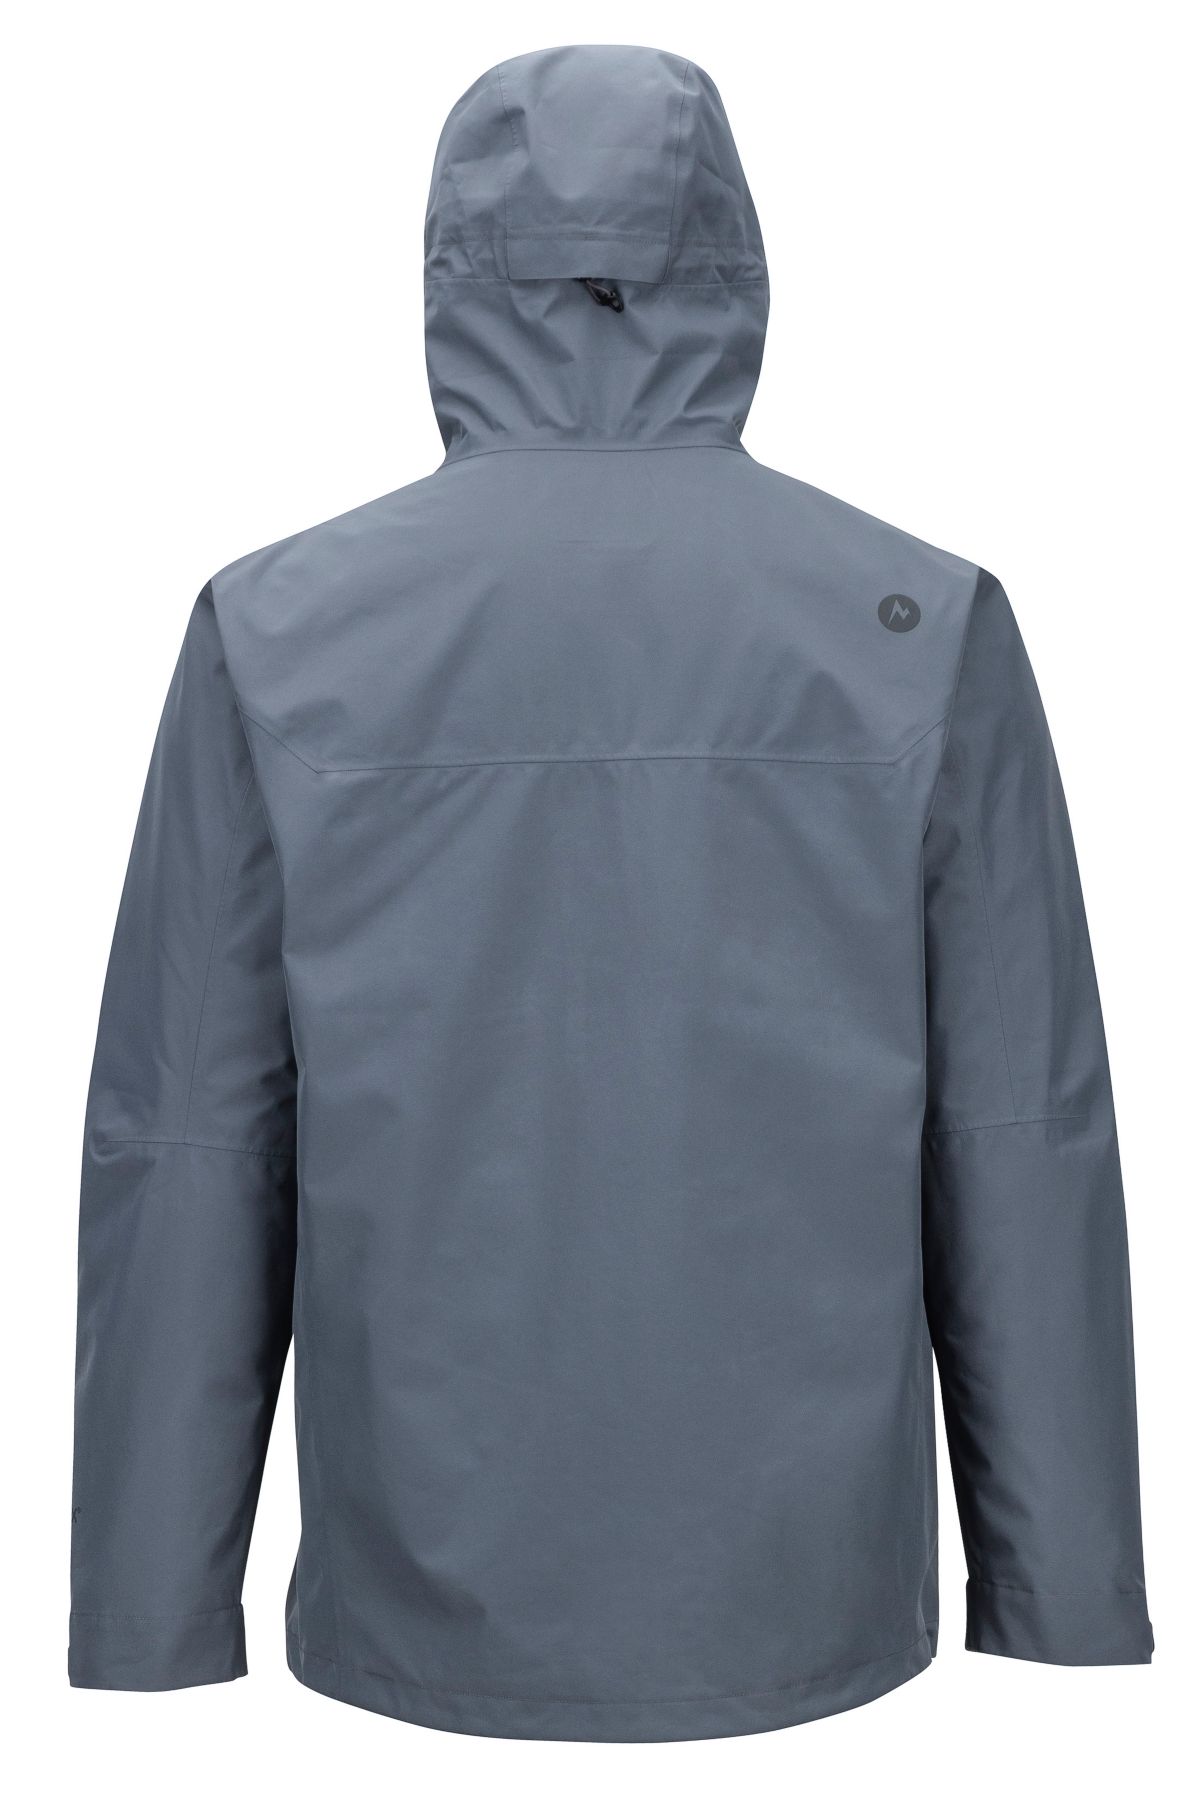 mens minimalist component 3 in 1 jacket